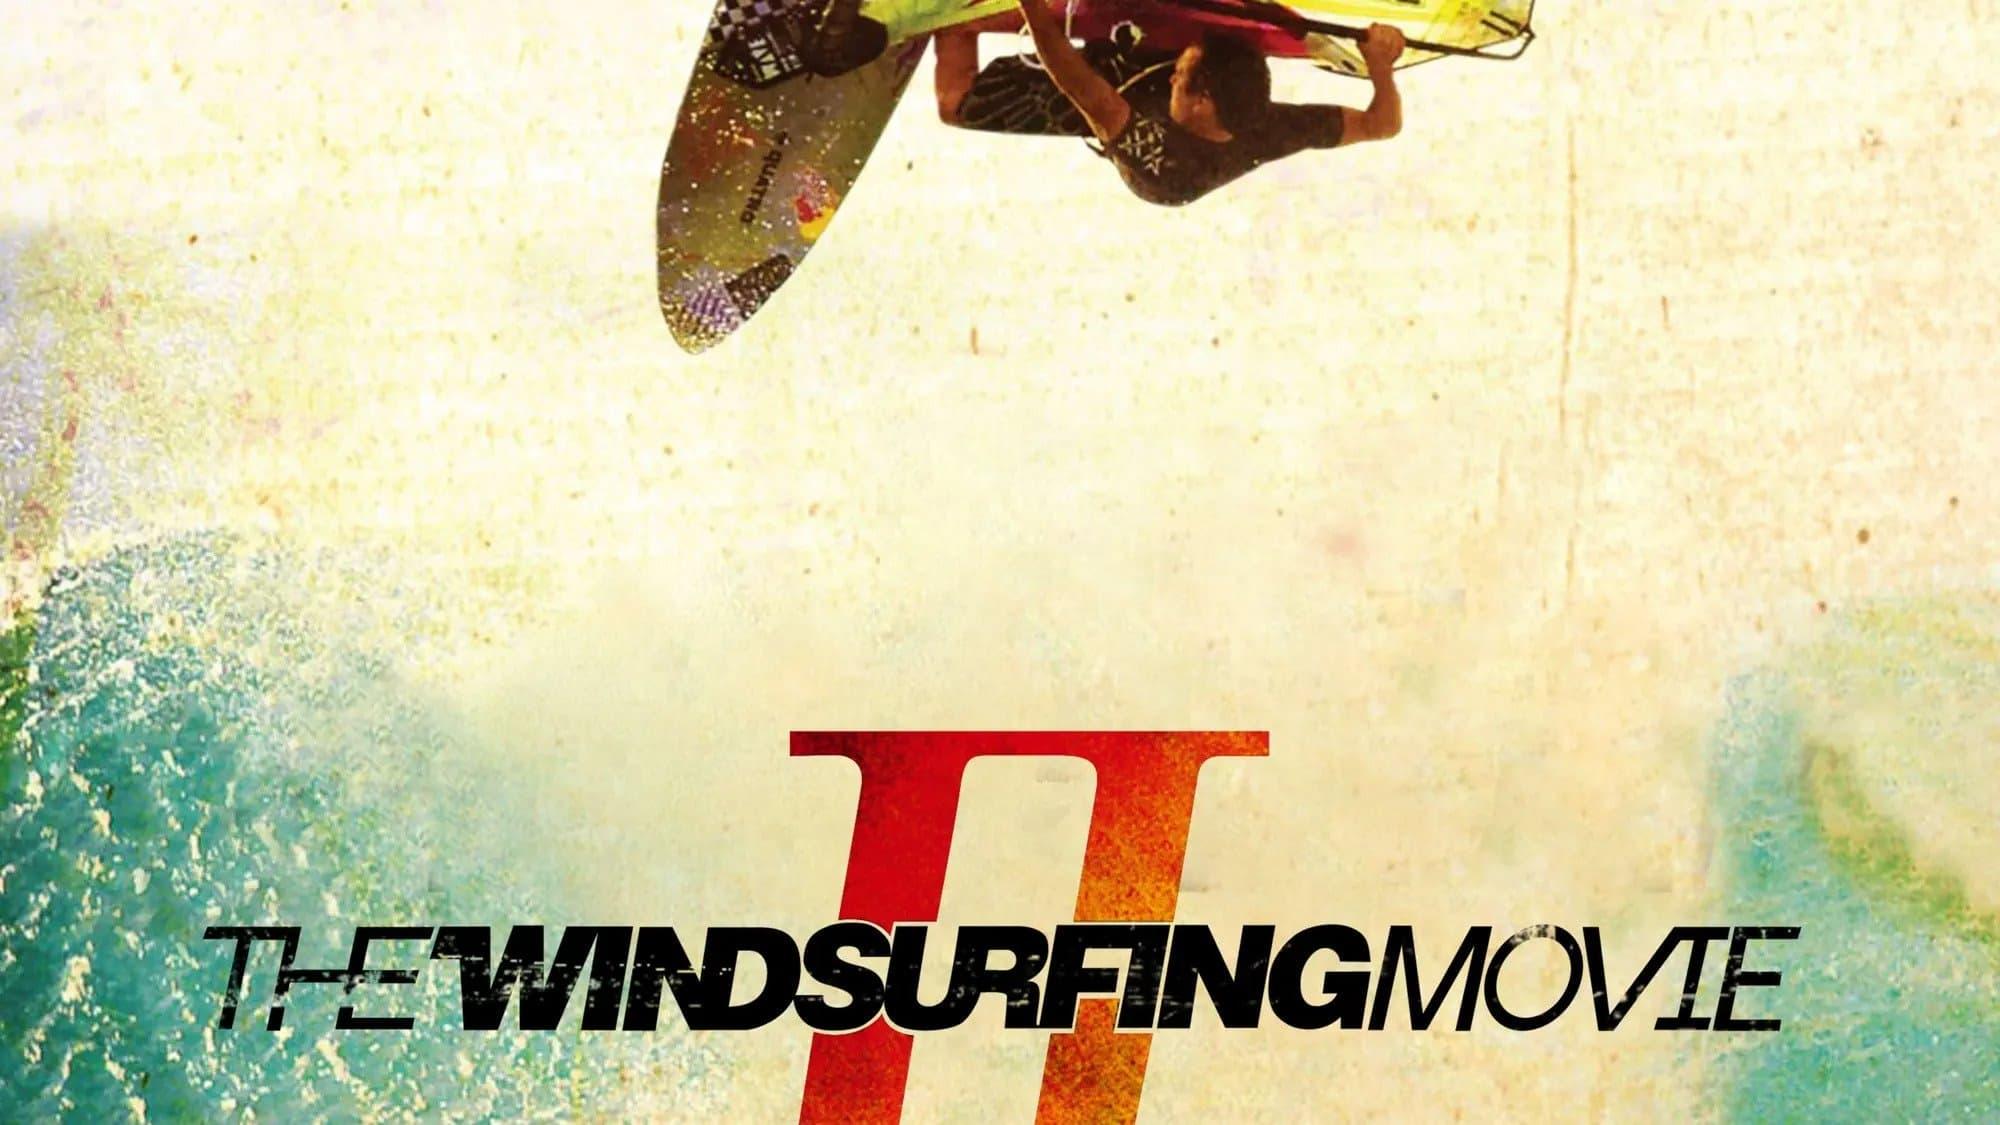 The Windsurfing Movie II backdrop